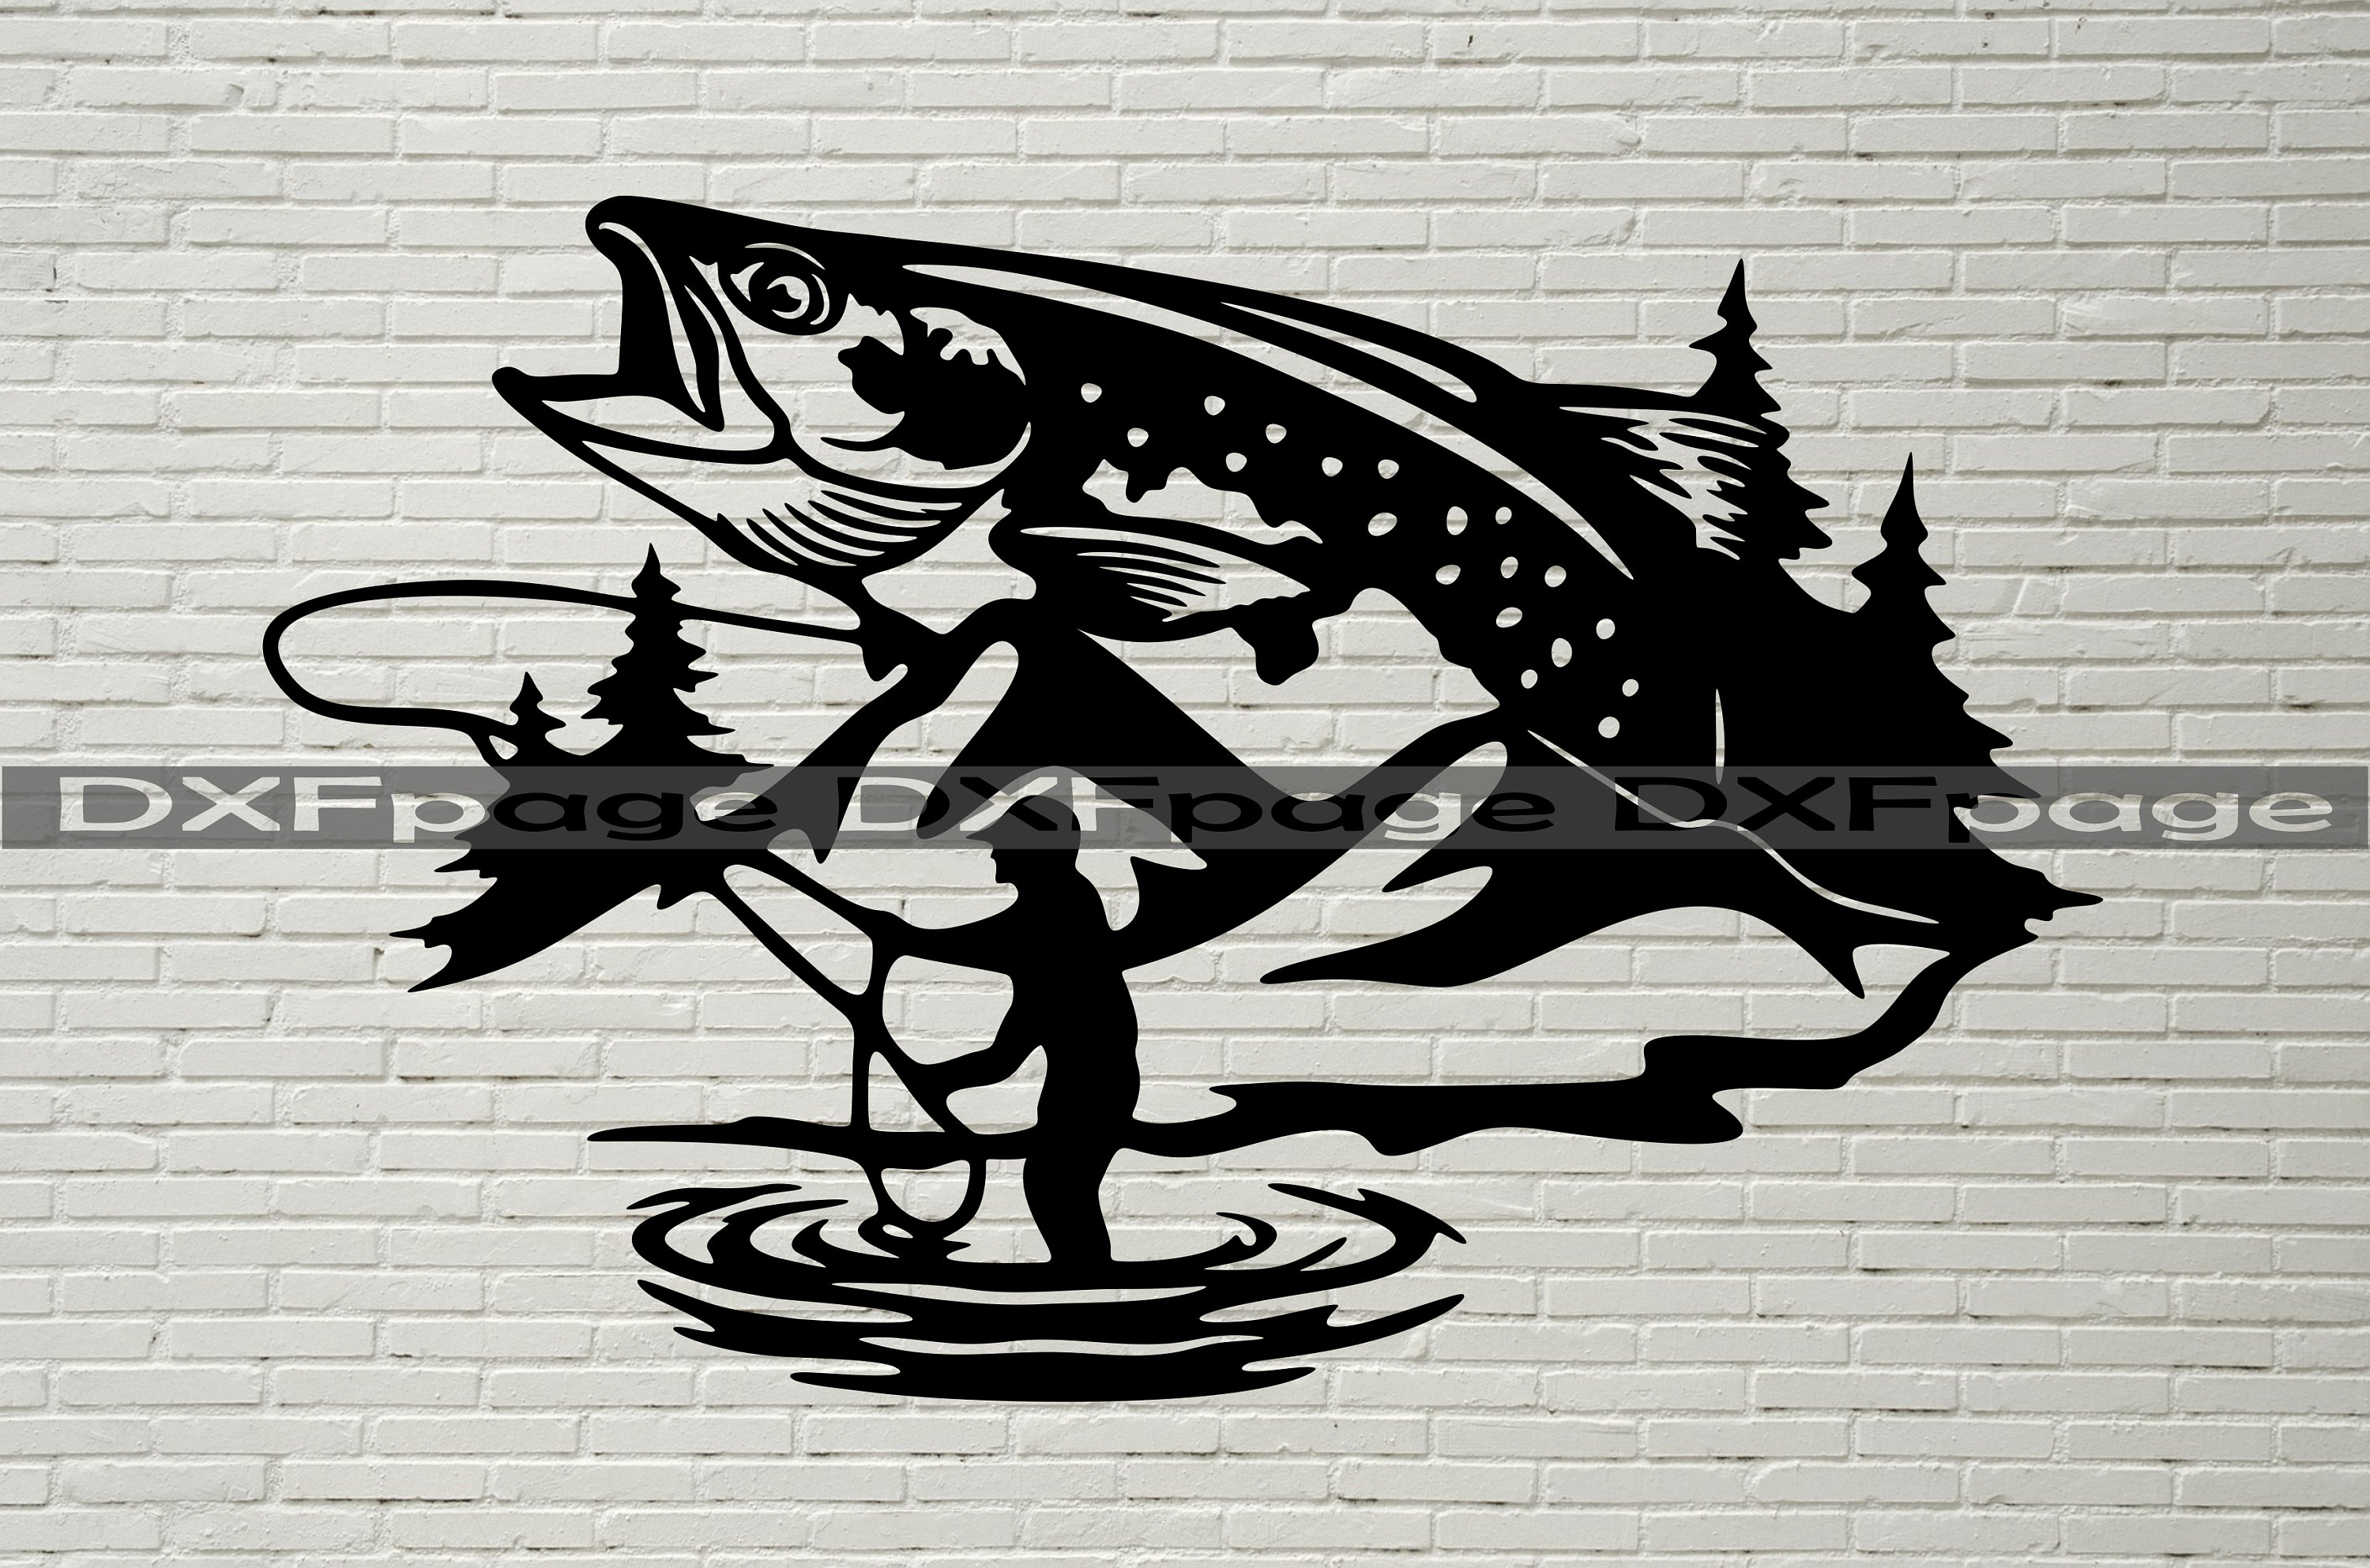 Fly Fishing Metal Wall Art (3 sizes) - Metal Wall Signs